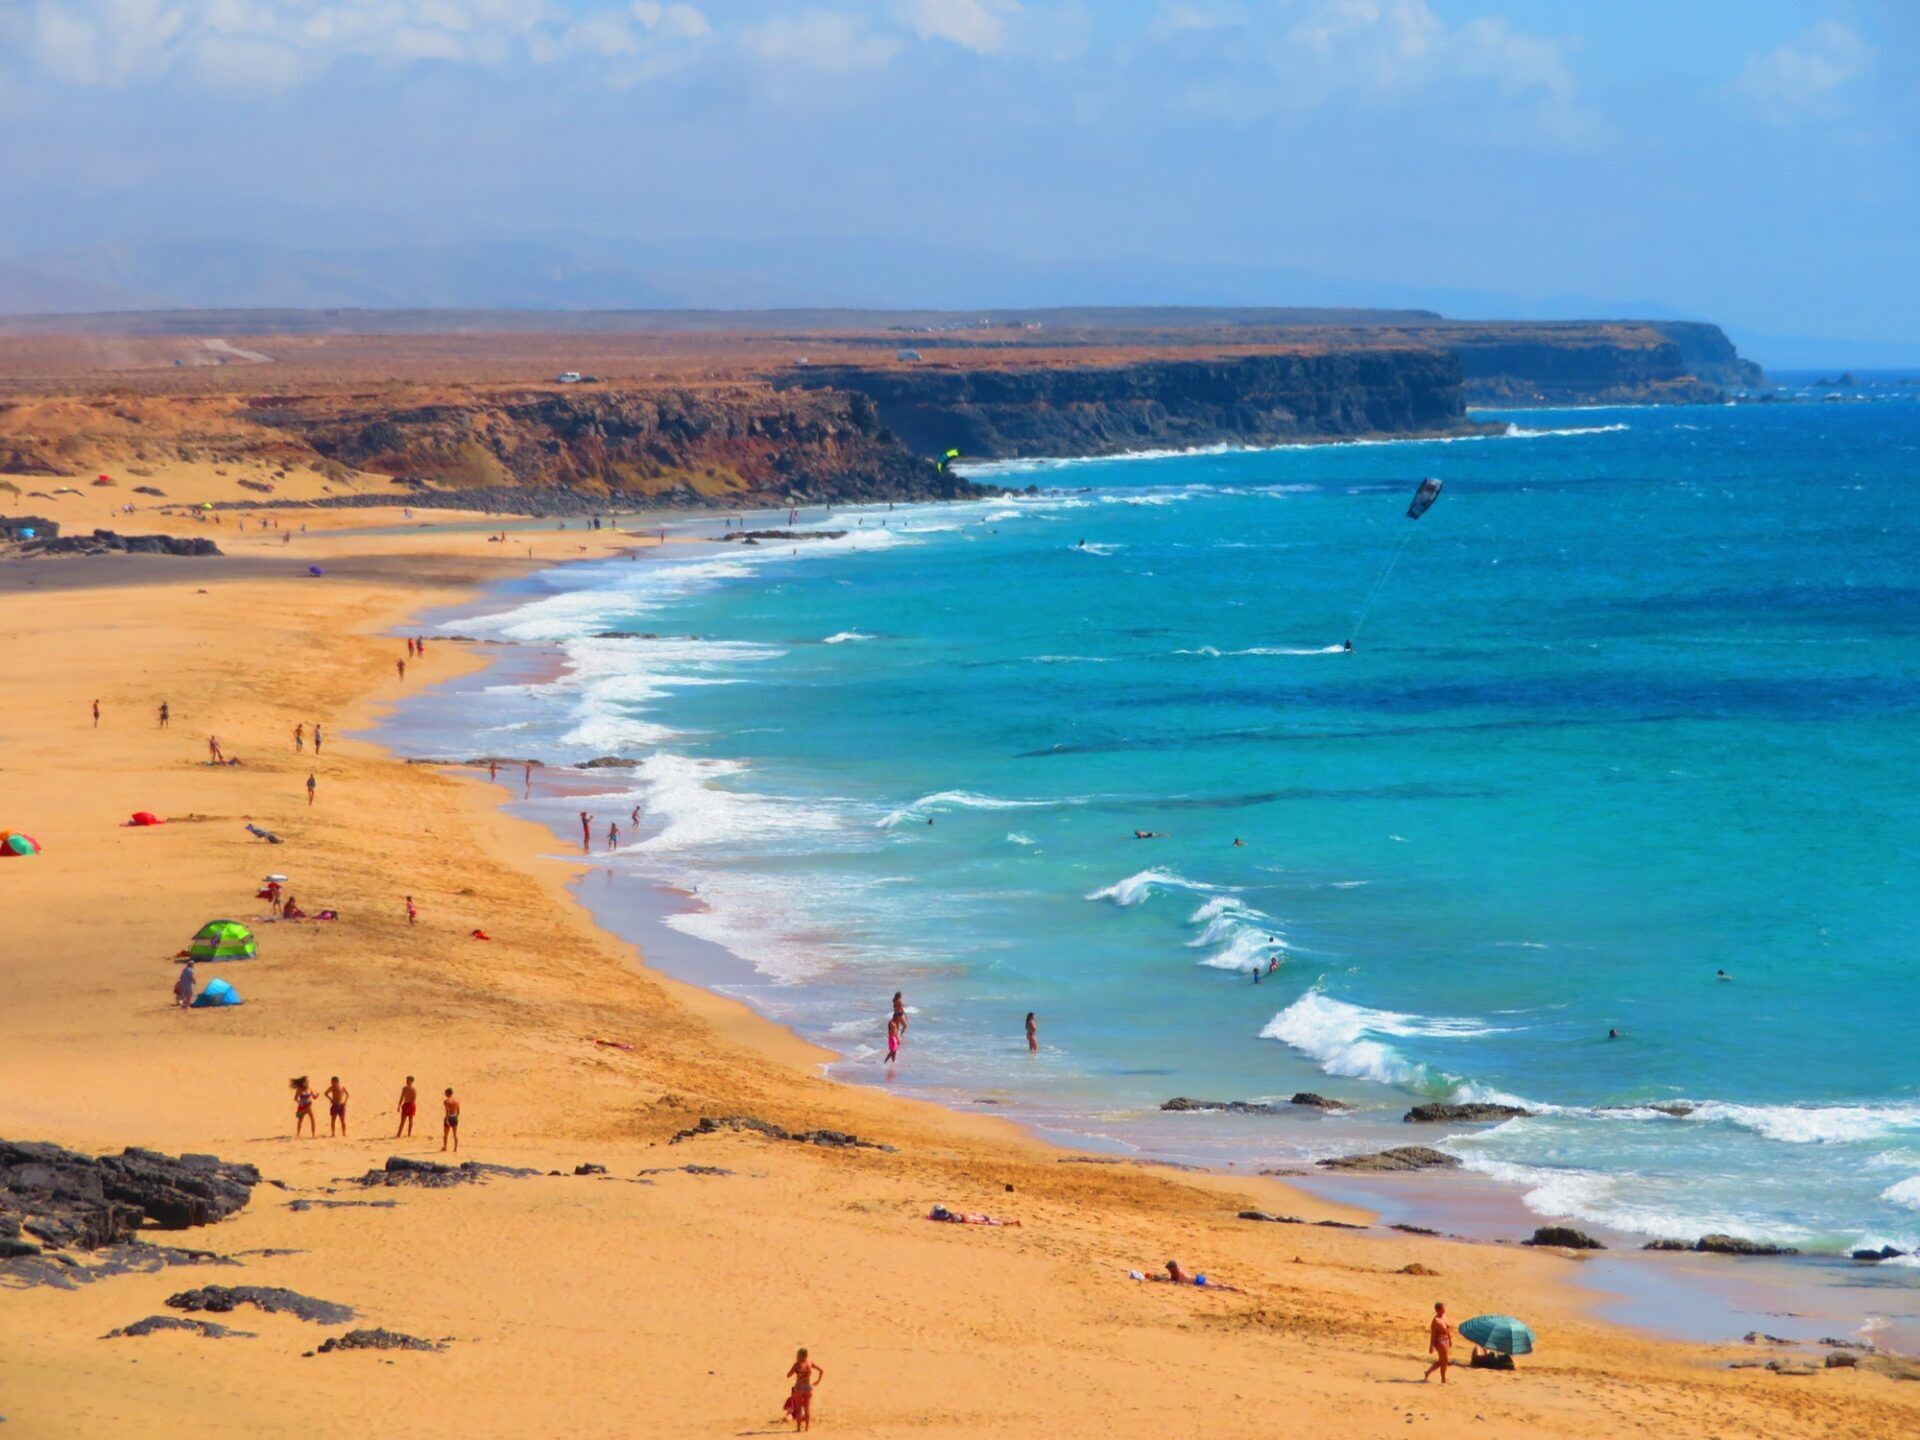 Beach of Fuerteventura front of the Atlantic Ocean, Canary Islands, Spain